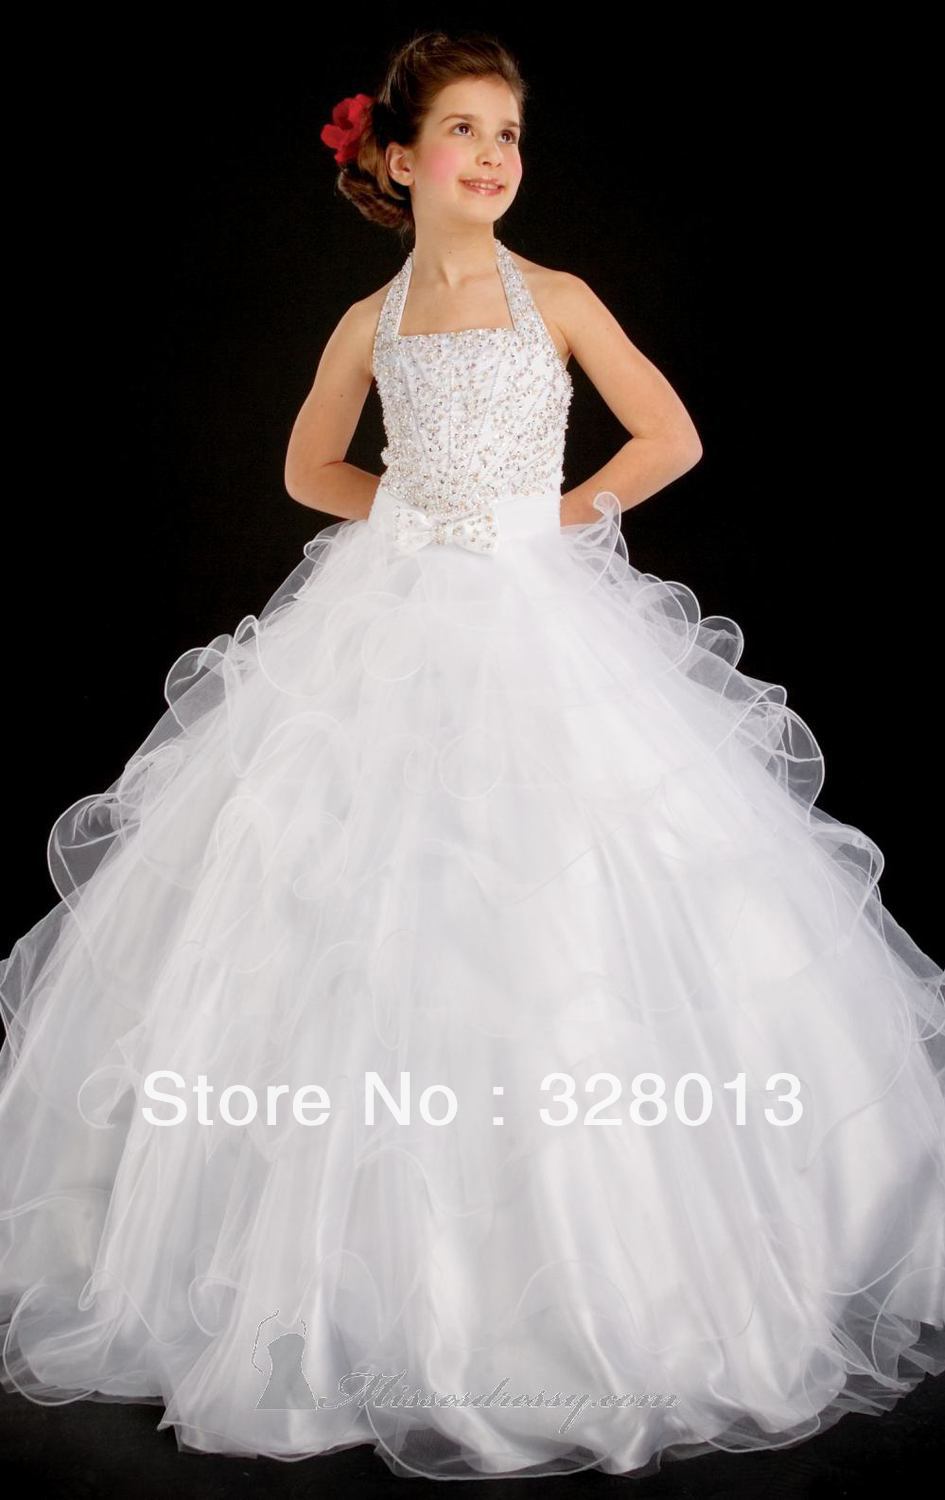 2013 Hot Sale Lovely Halter Sleeveless Ball Gowns Beads Organza Flower Girl Dresses Custom Made dress